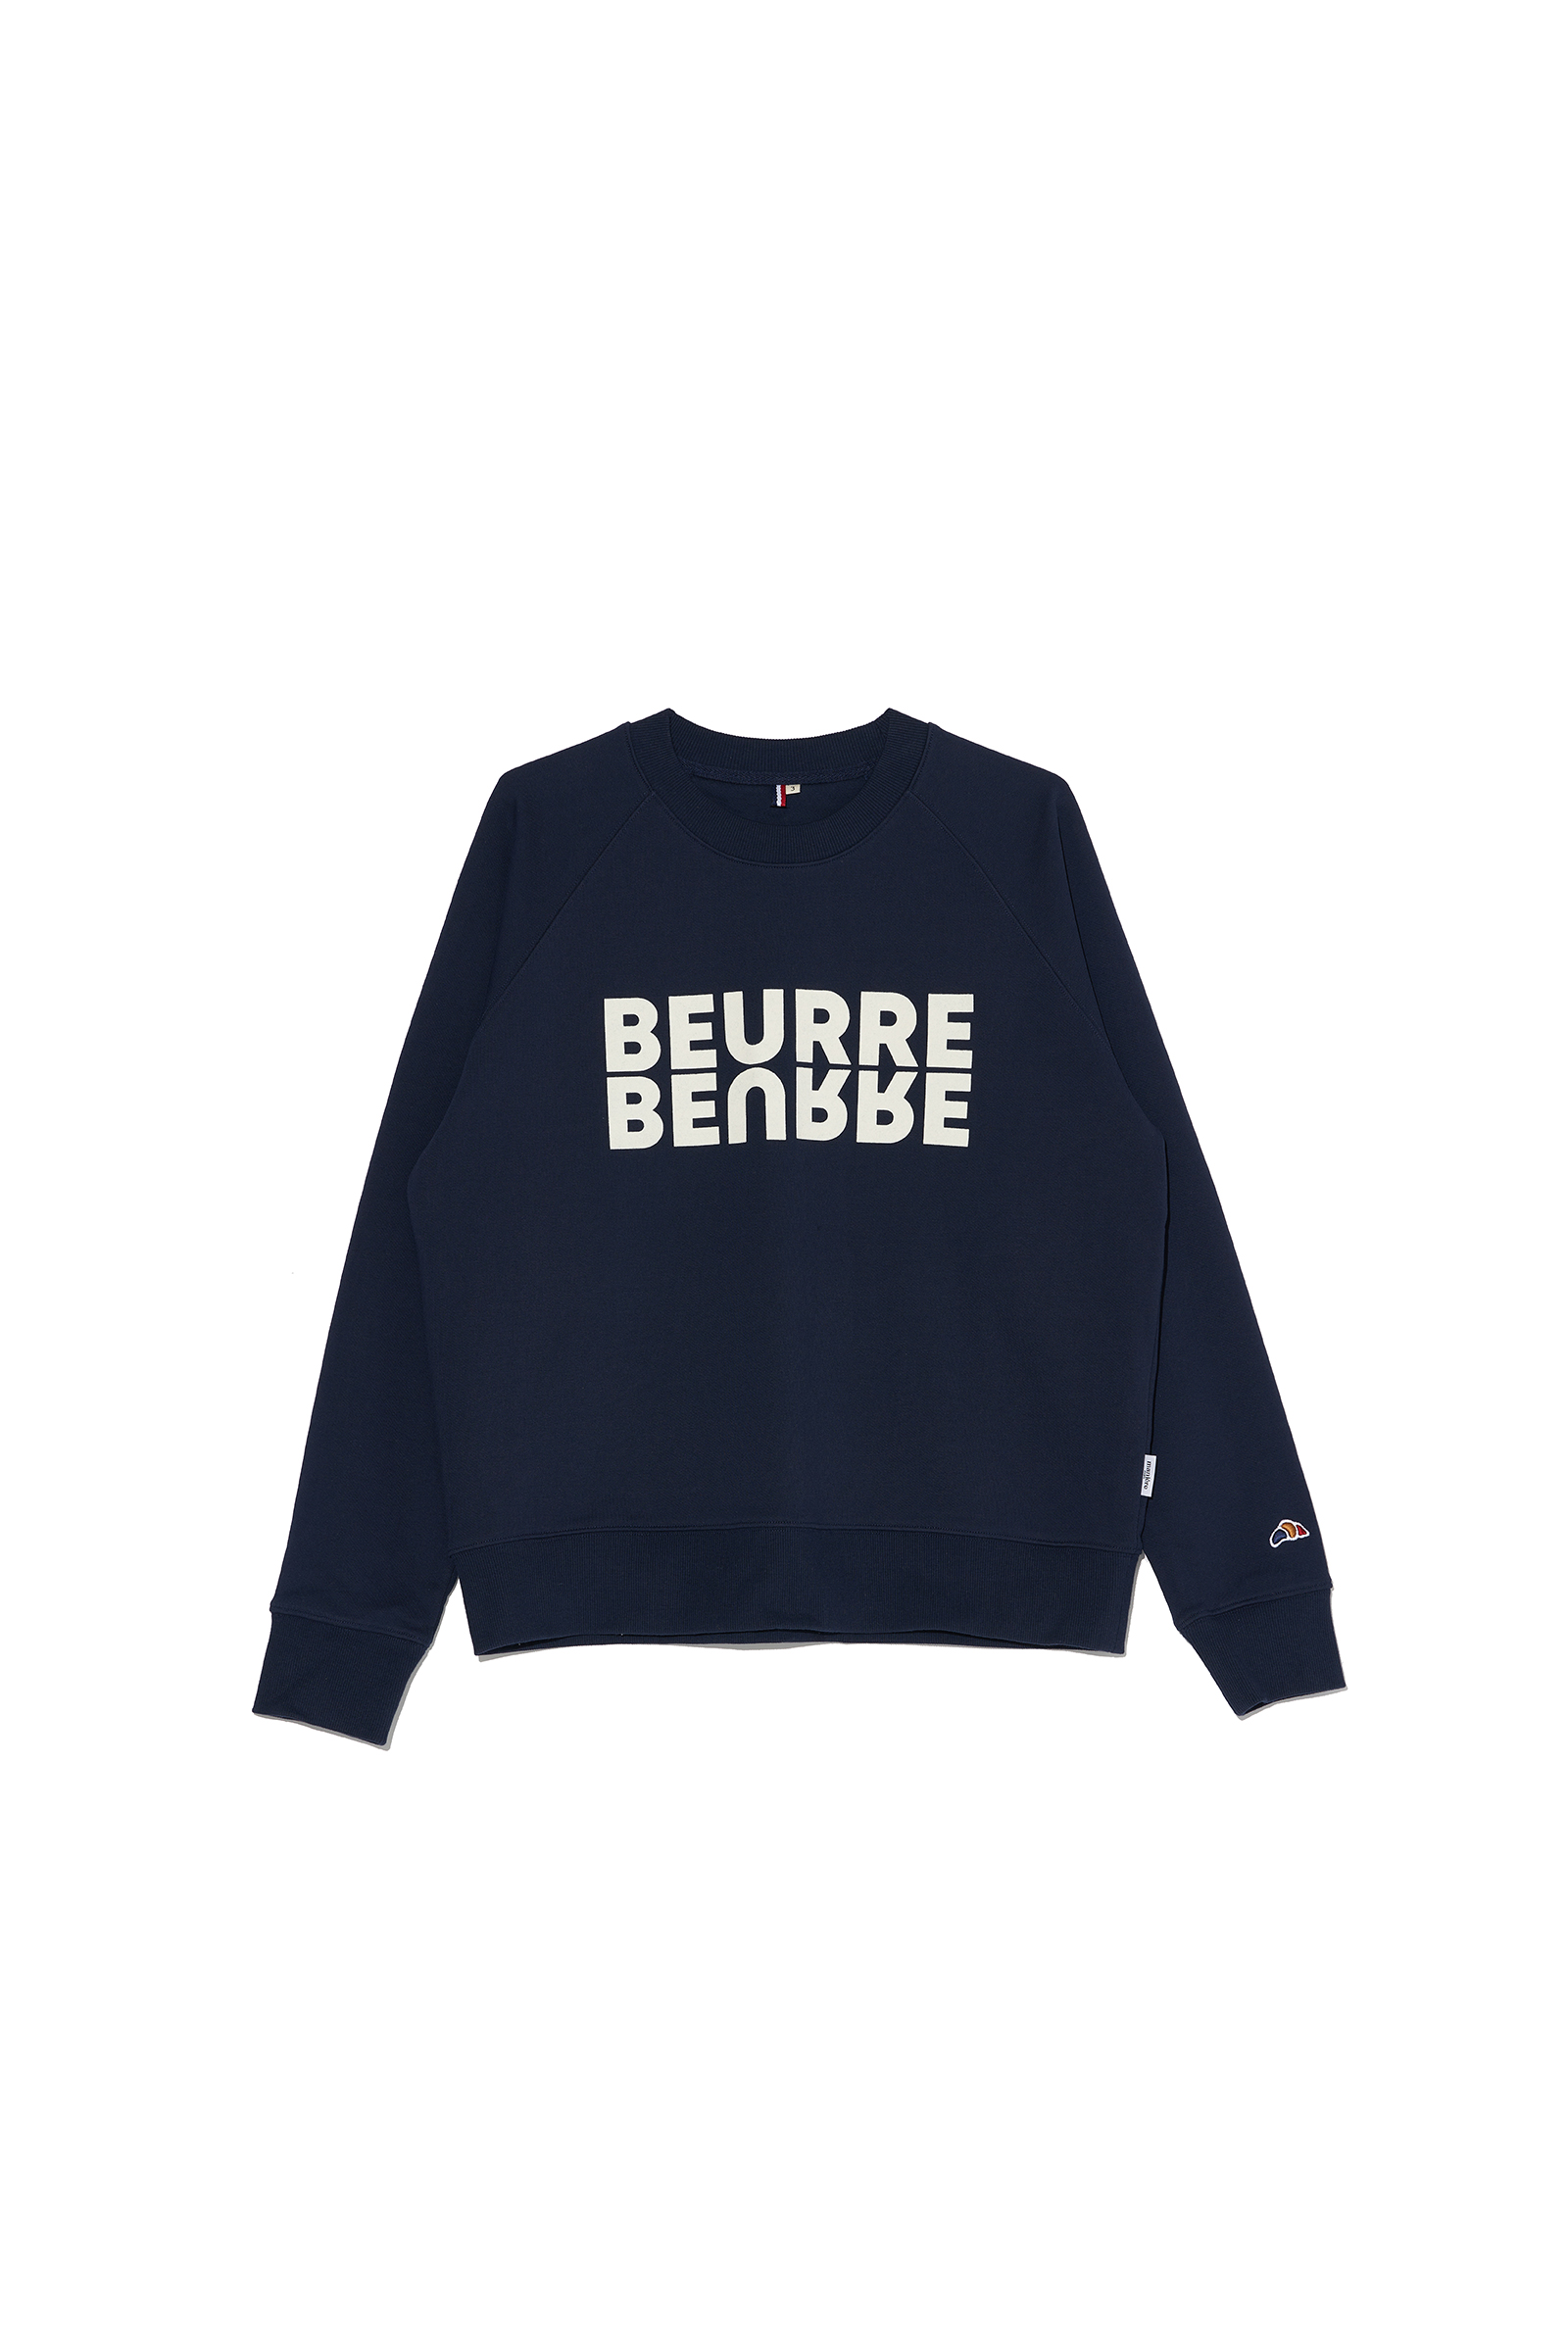 ep.6 BEURRE Decalcomanie sweatshirt (Navy)